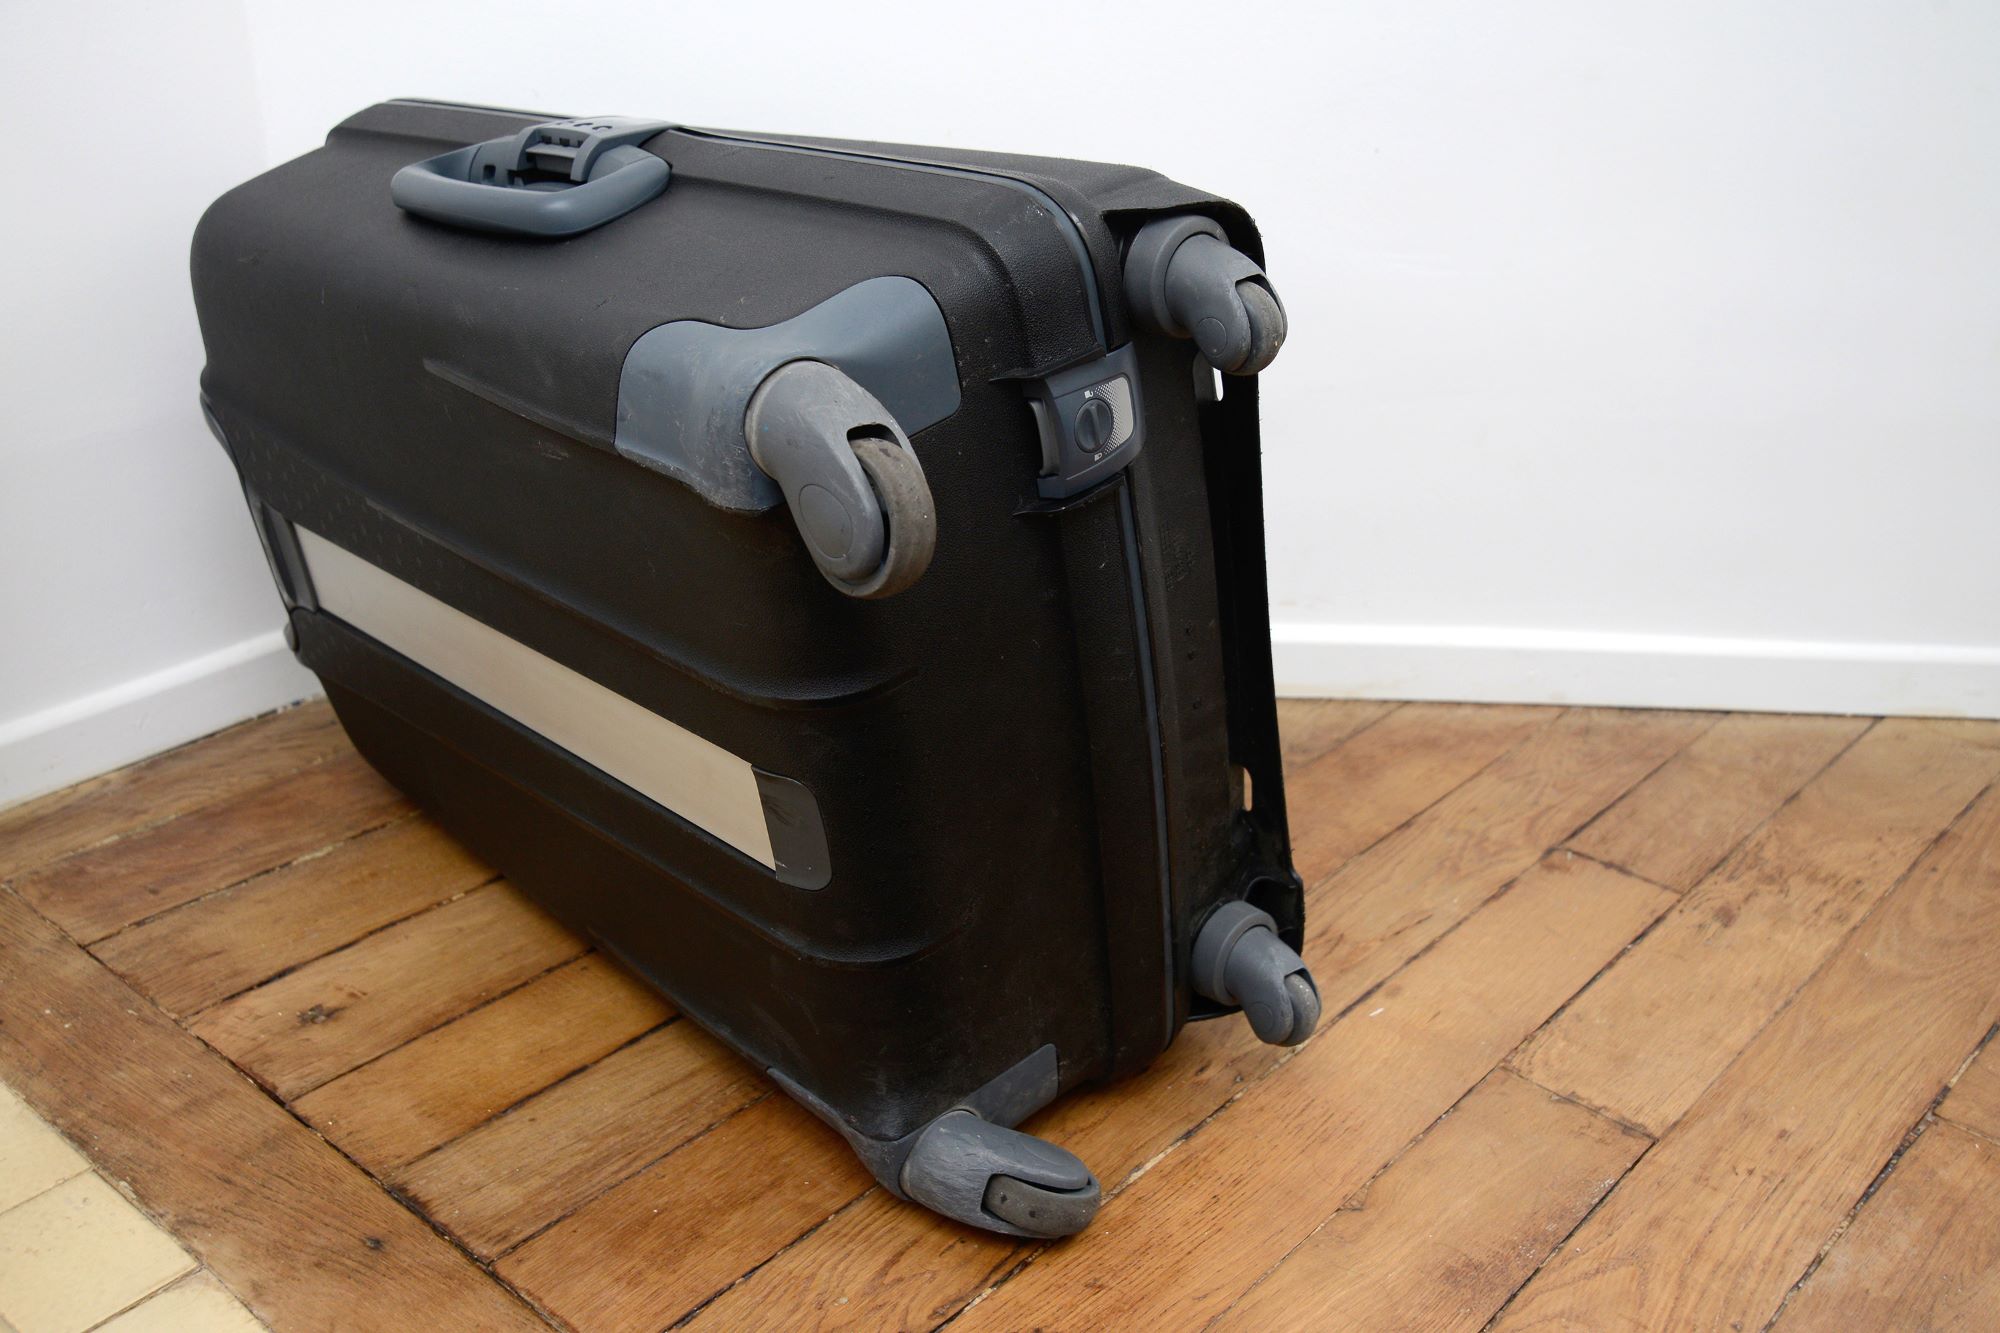 How To Replace Wheels Samsonite Suitcase? | TouristSecrets